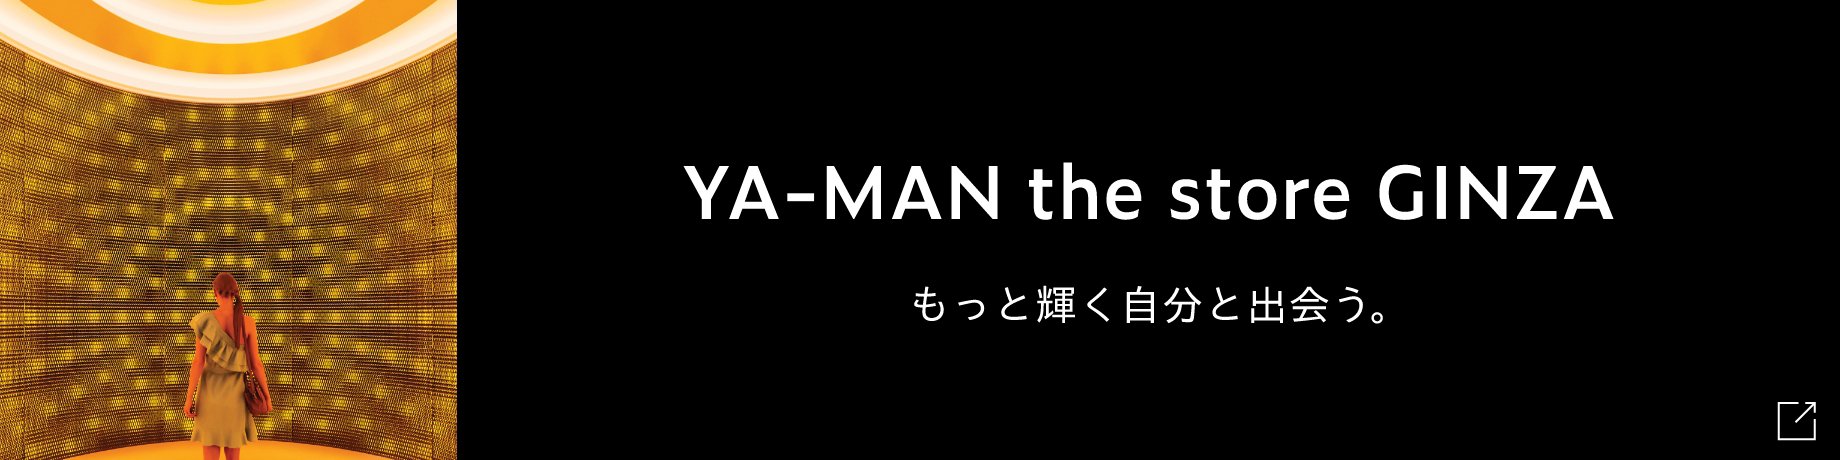 ｢YA-MAN the store GINZA」